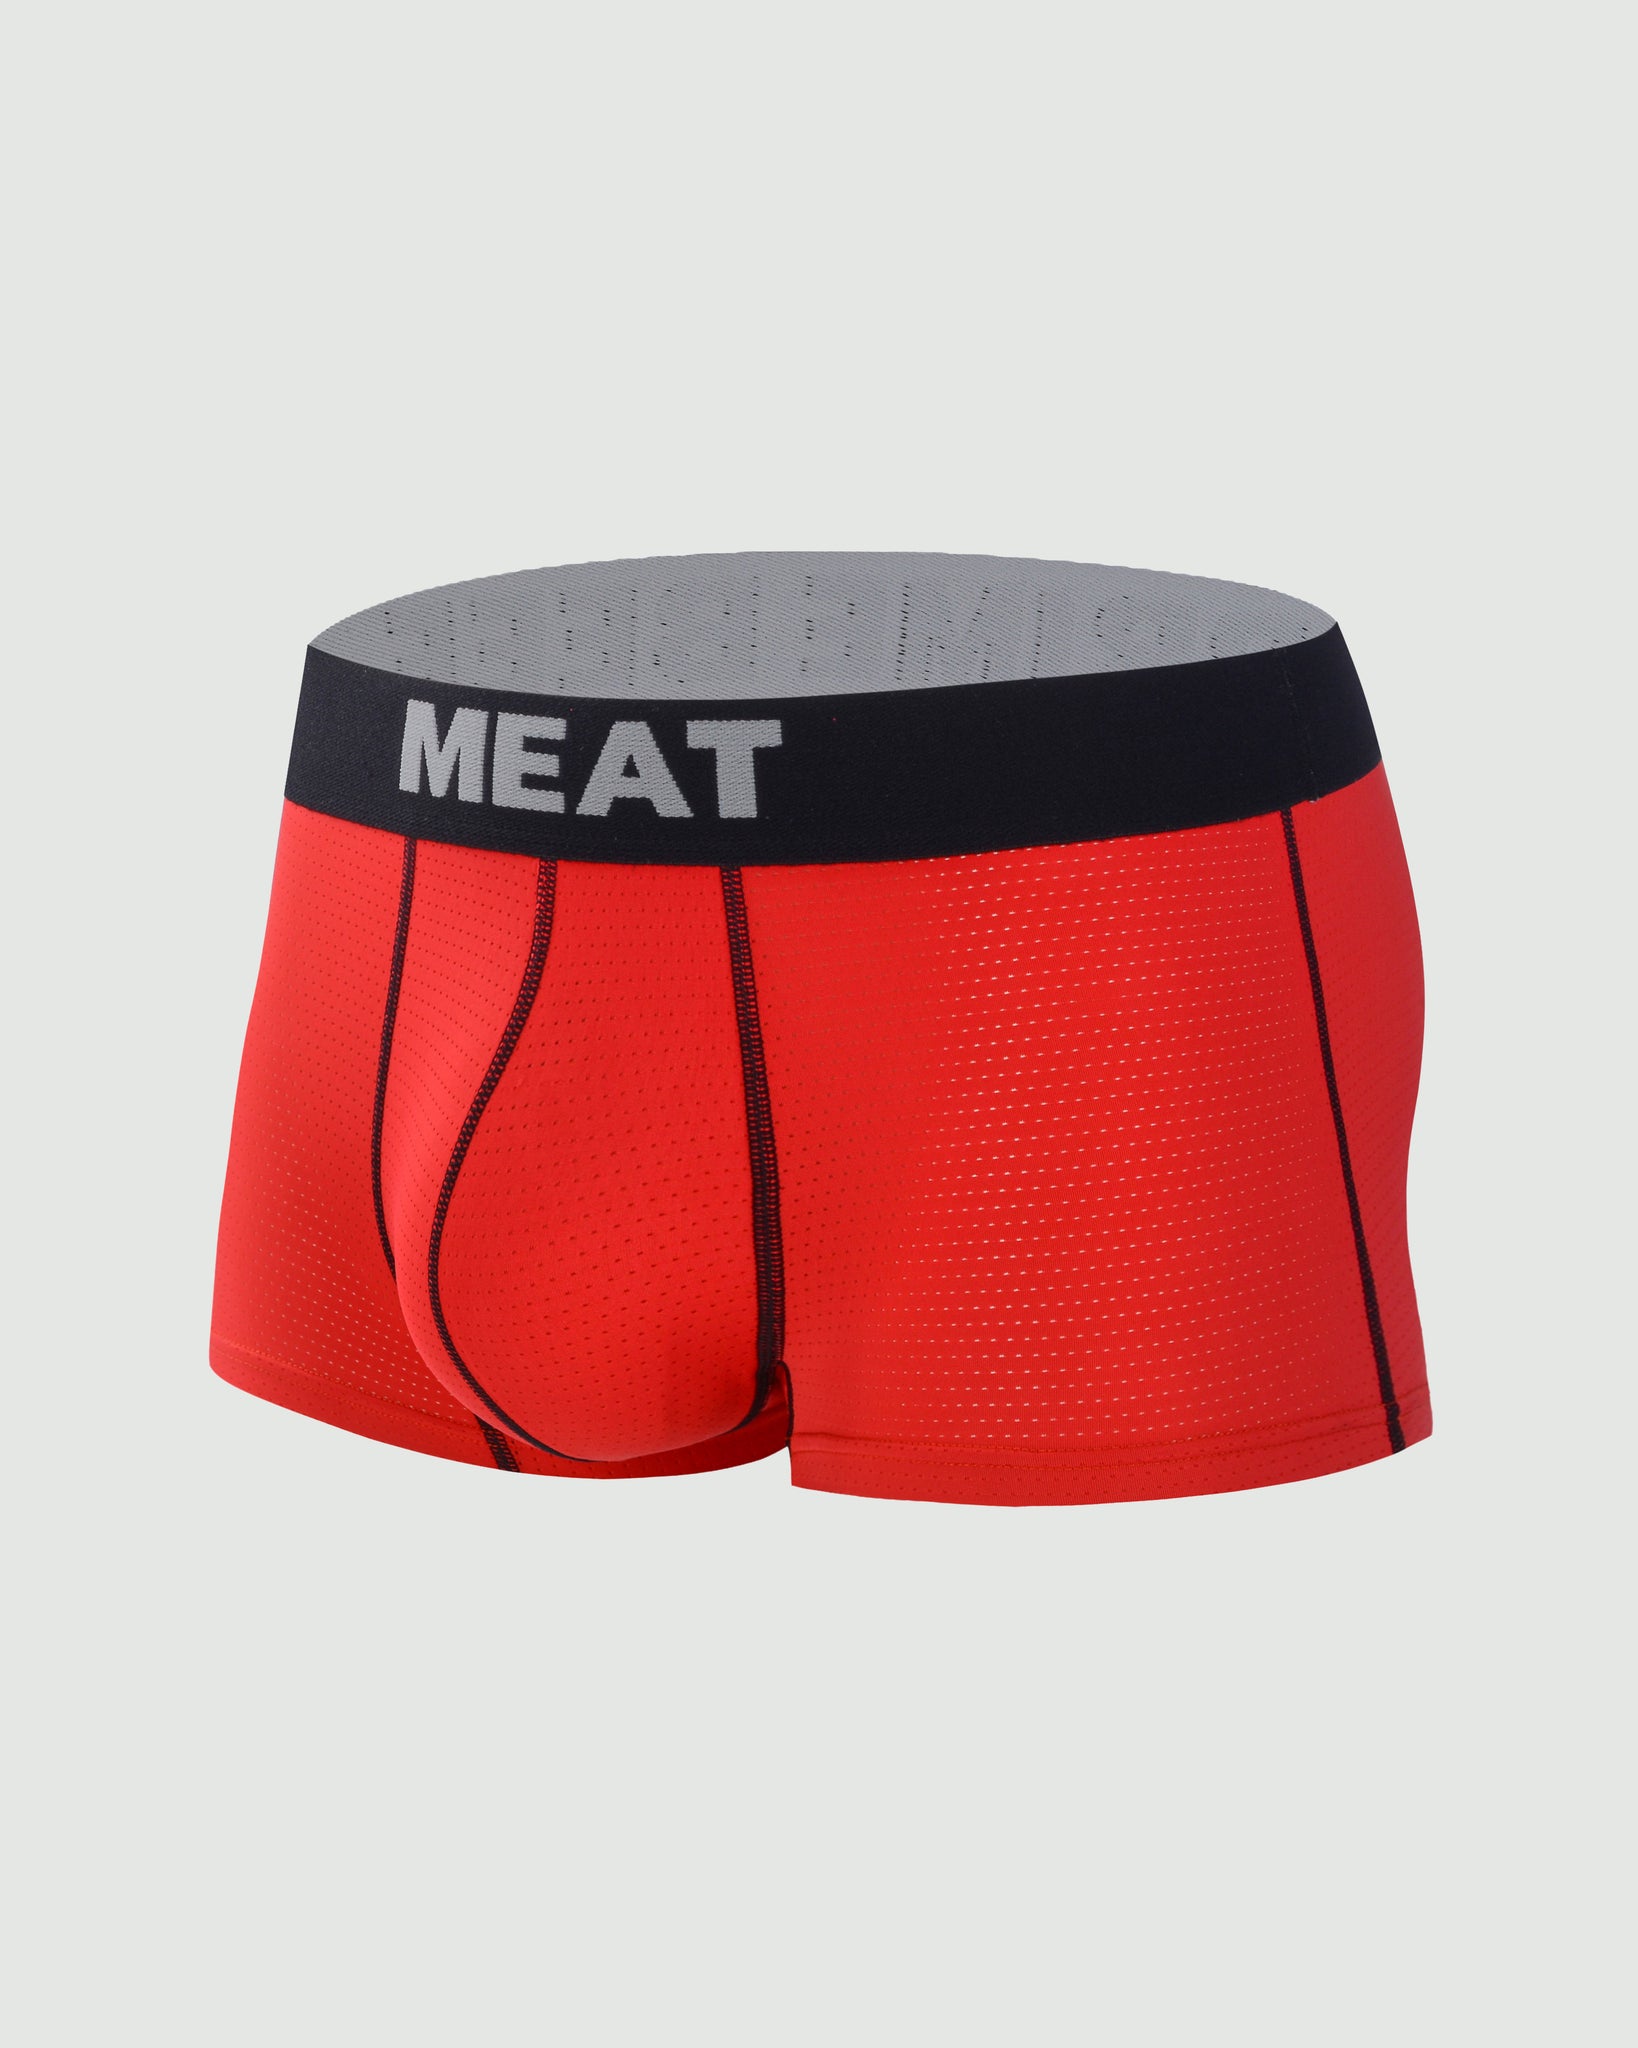 I Hand-Rub My Meat - Roast BeefMens Cotton Trunk Underwear - Davson Sales